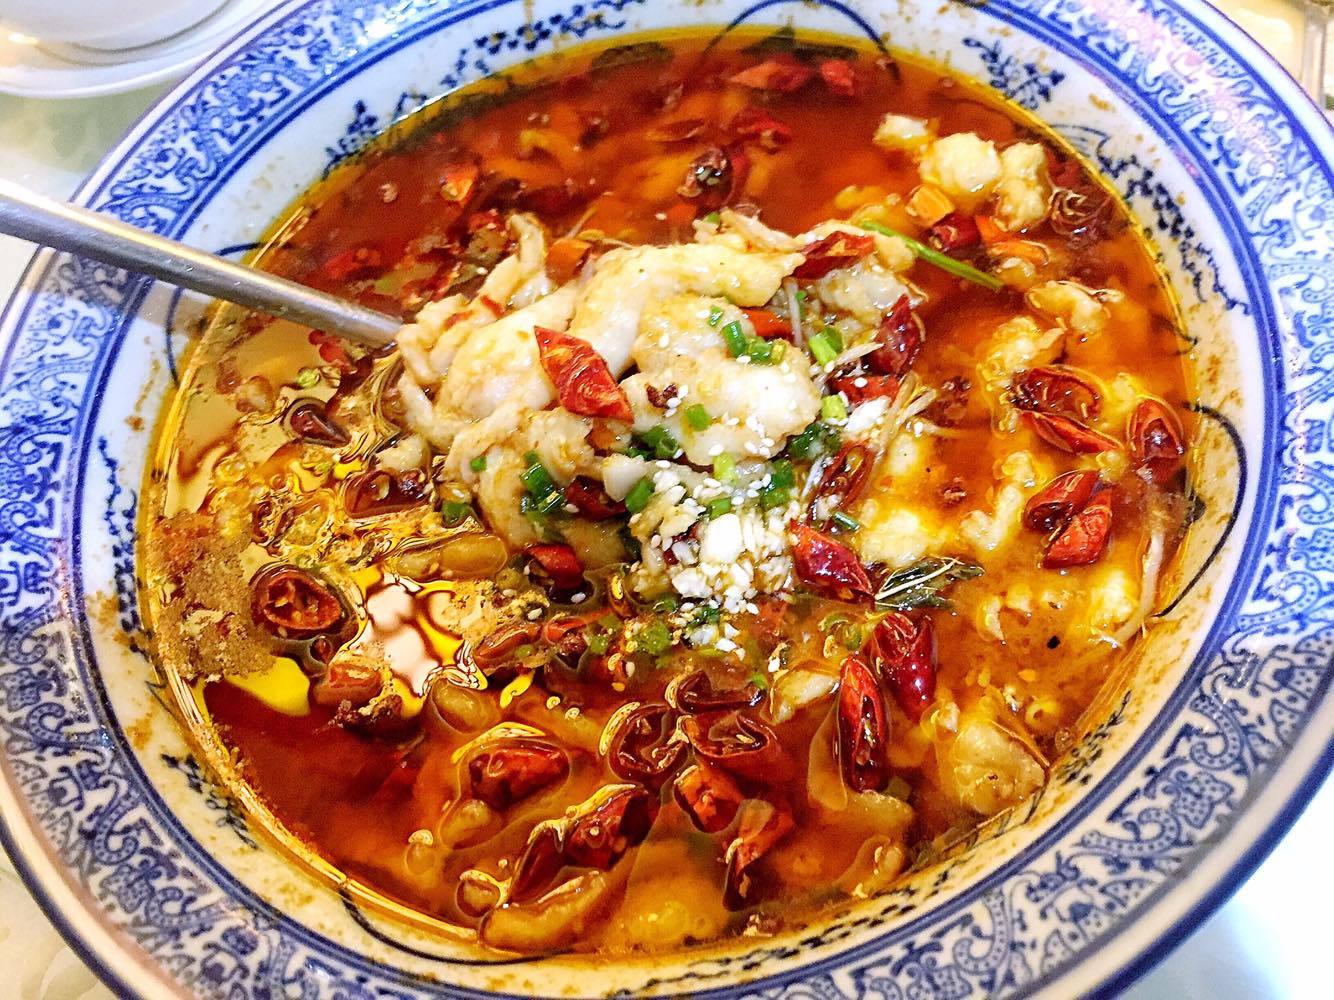 New Restaurant Alert: Fu Yuan– Chinese Cuisine in Legaspi Village, Makati